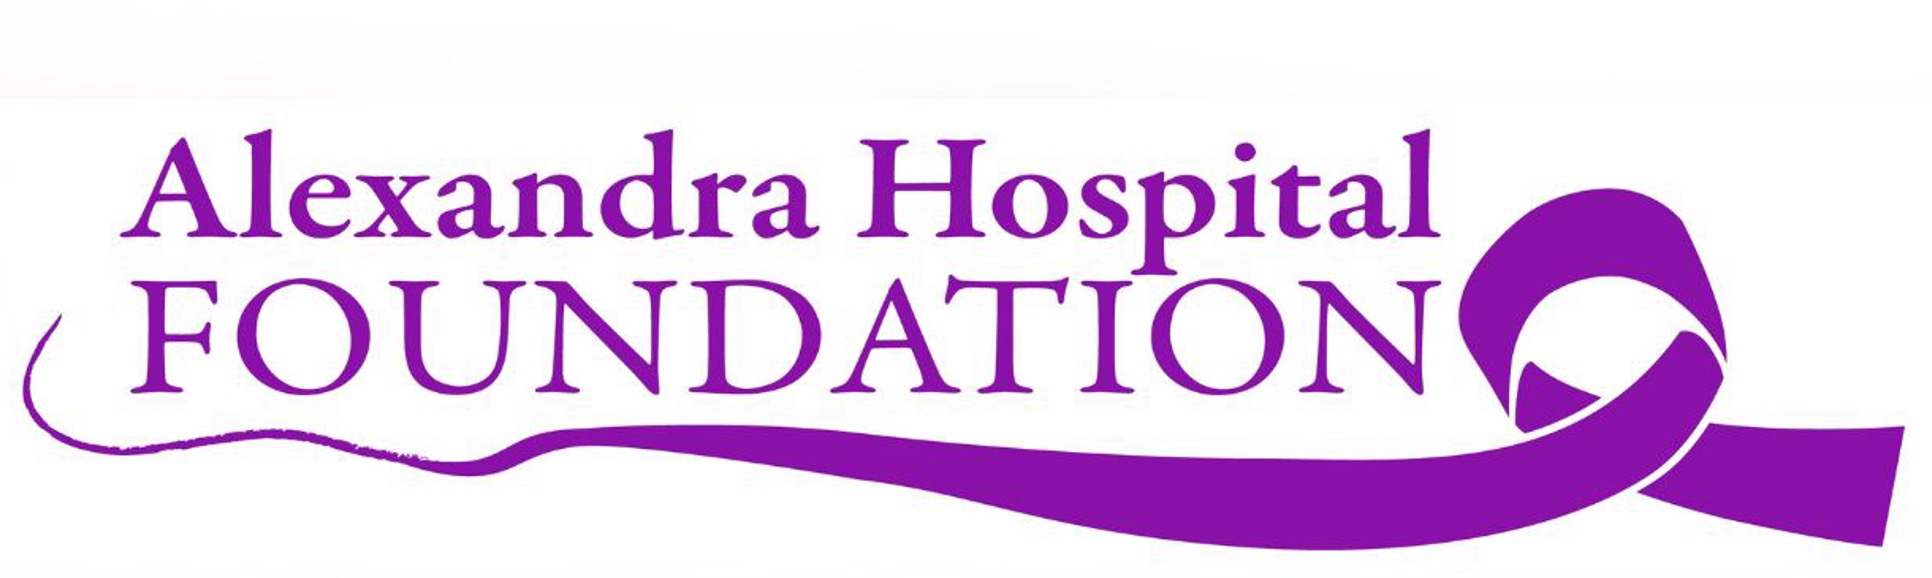 ALEXANDRA HOSPITAL FOUNDATION